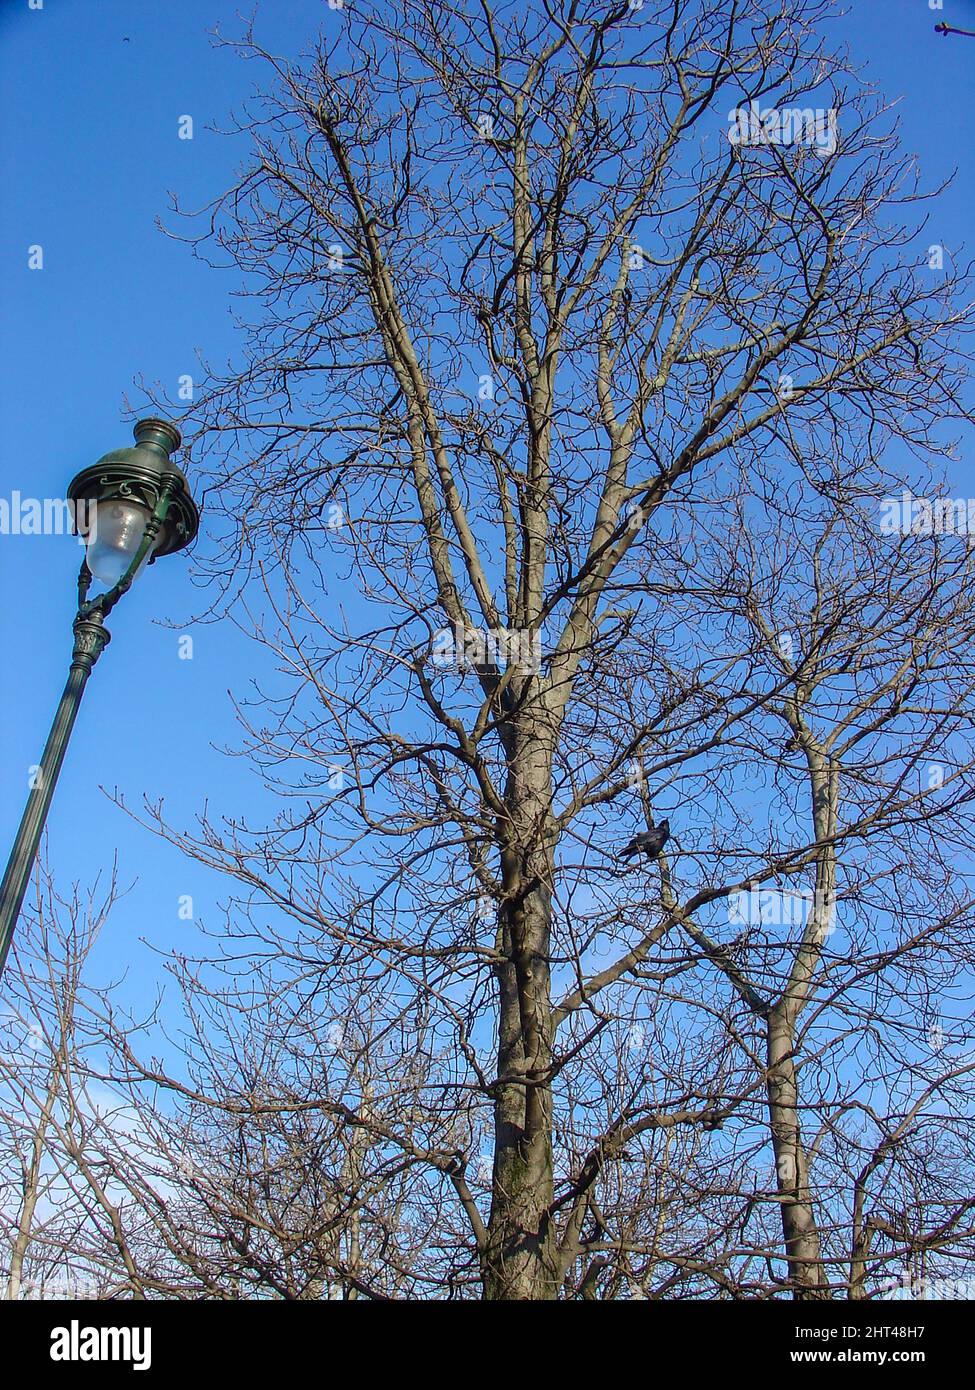 Walking in paris city parks, city crows. Stock Photo